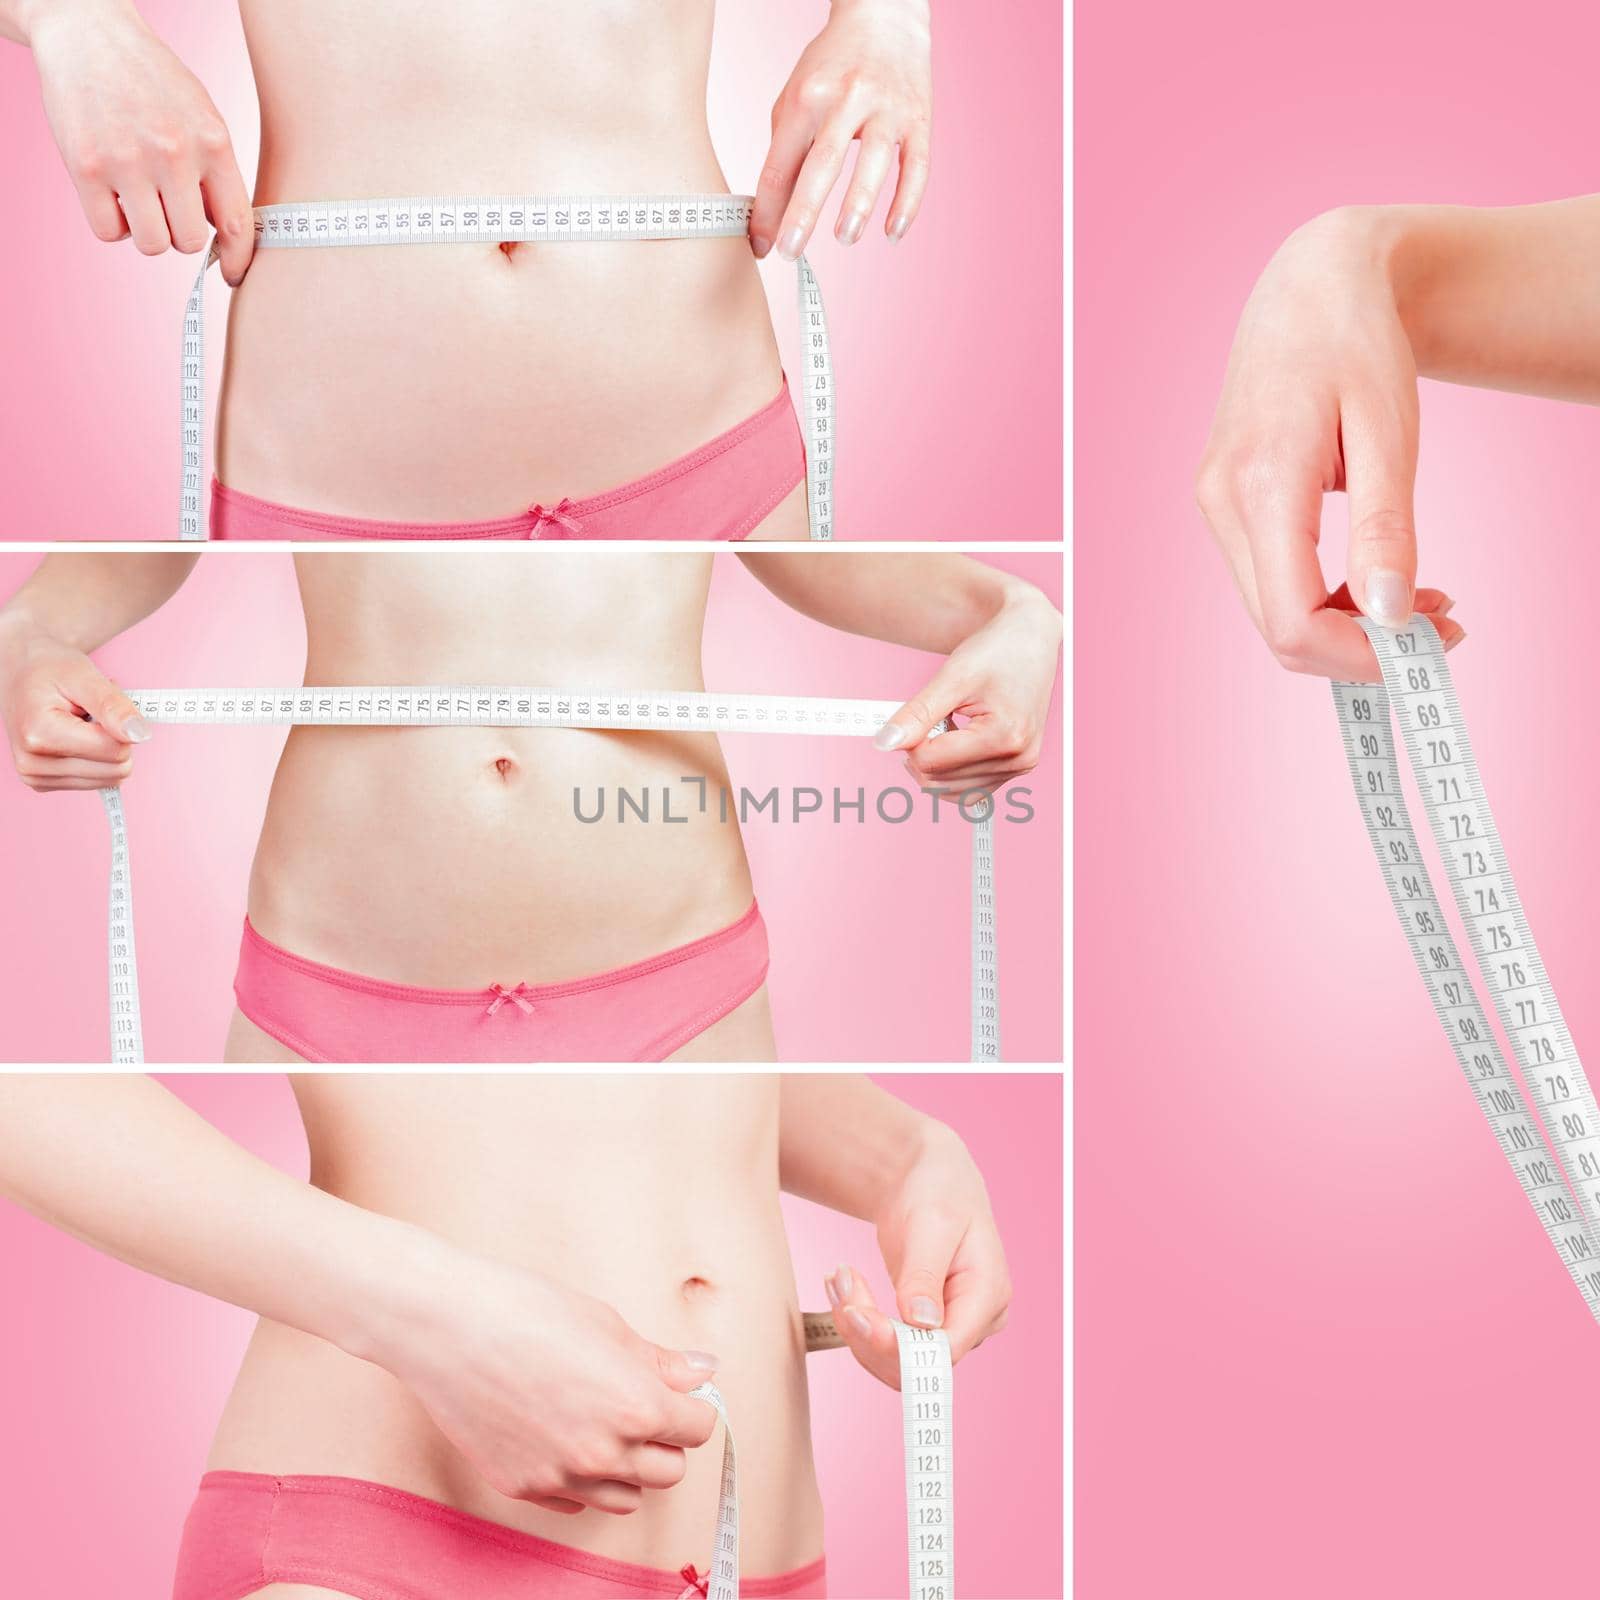 Measuring waist. Сollage by alexAleksei